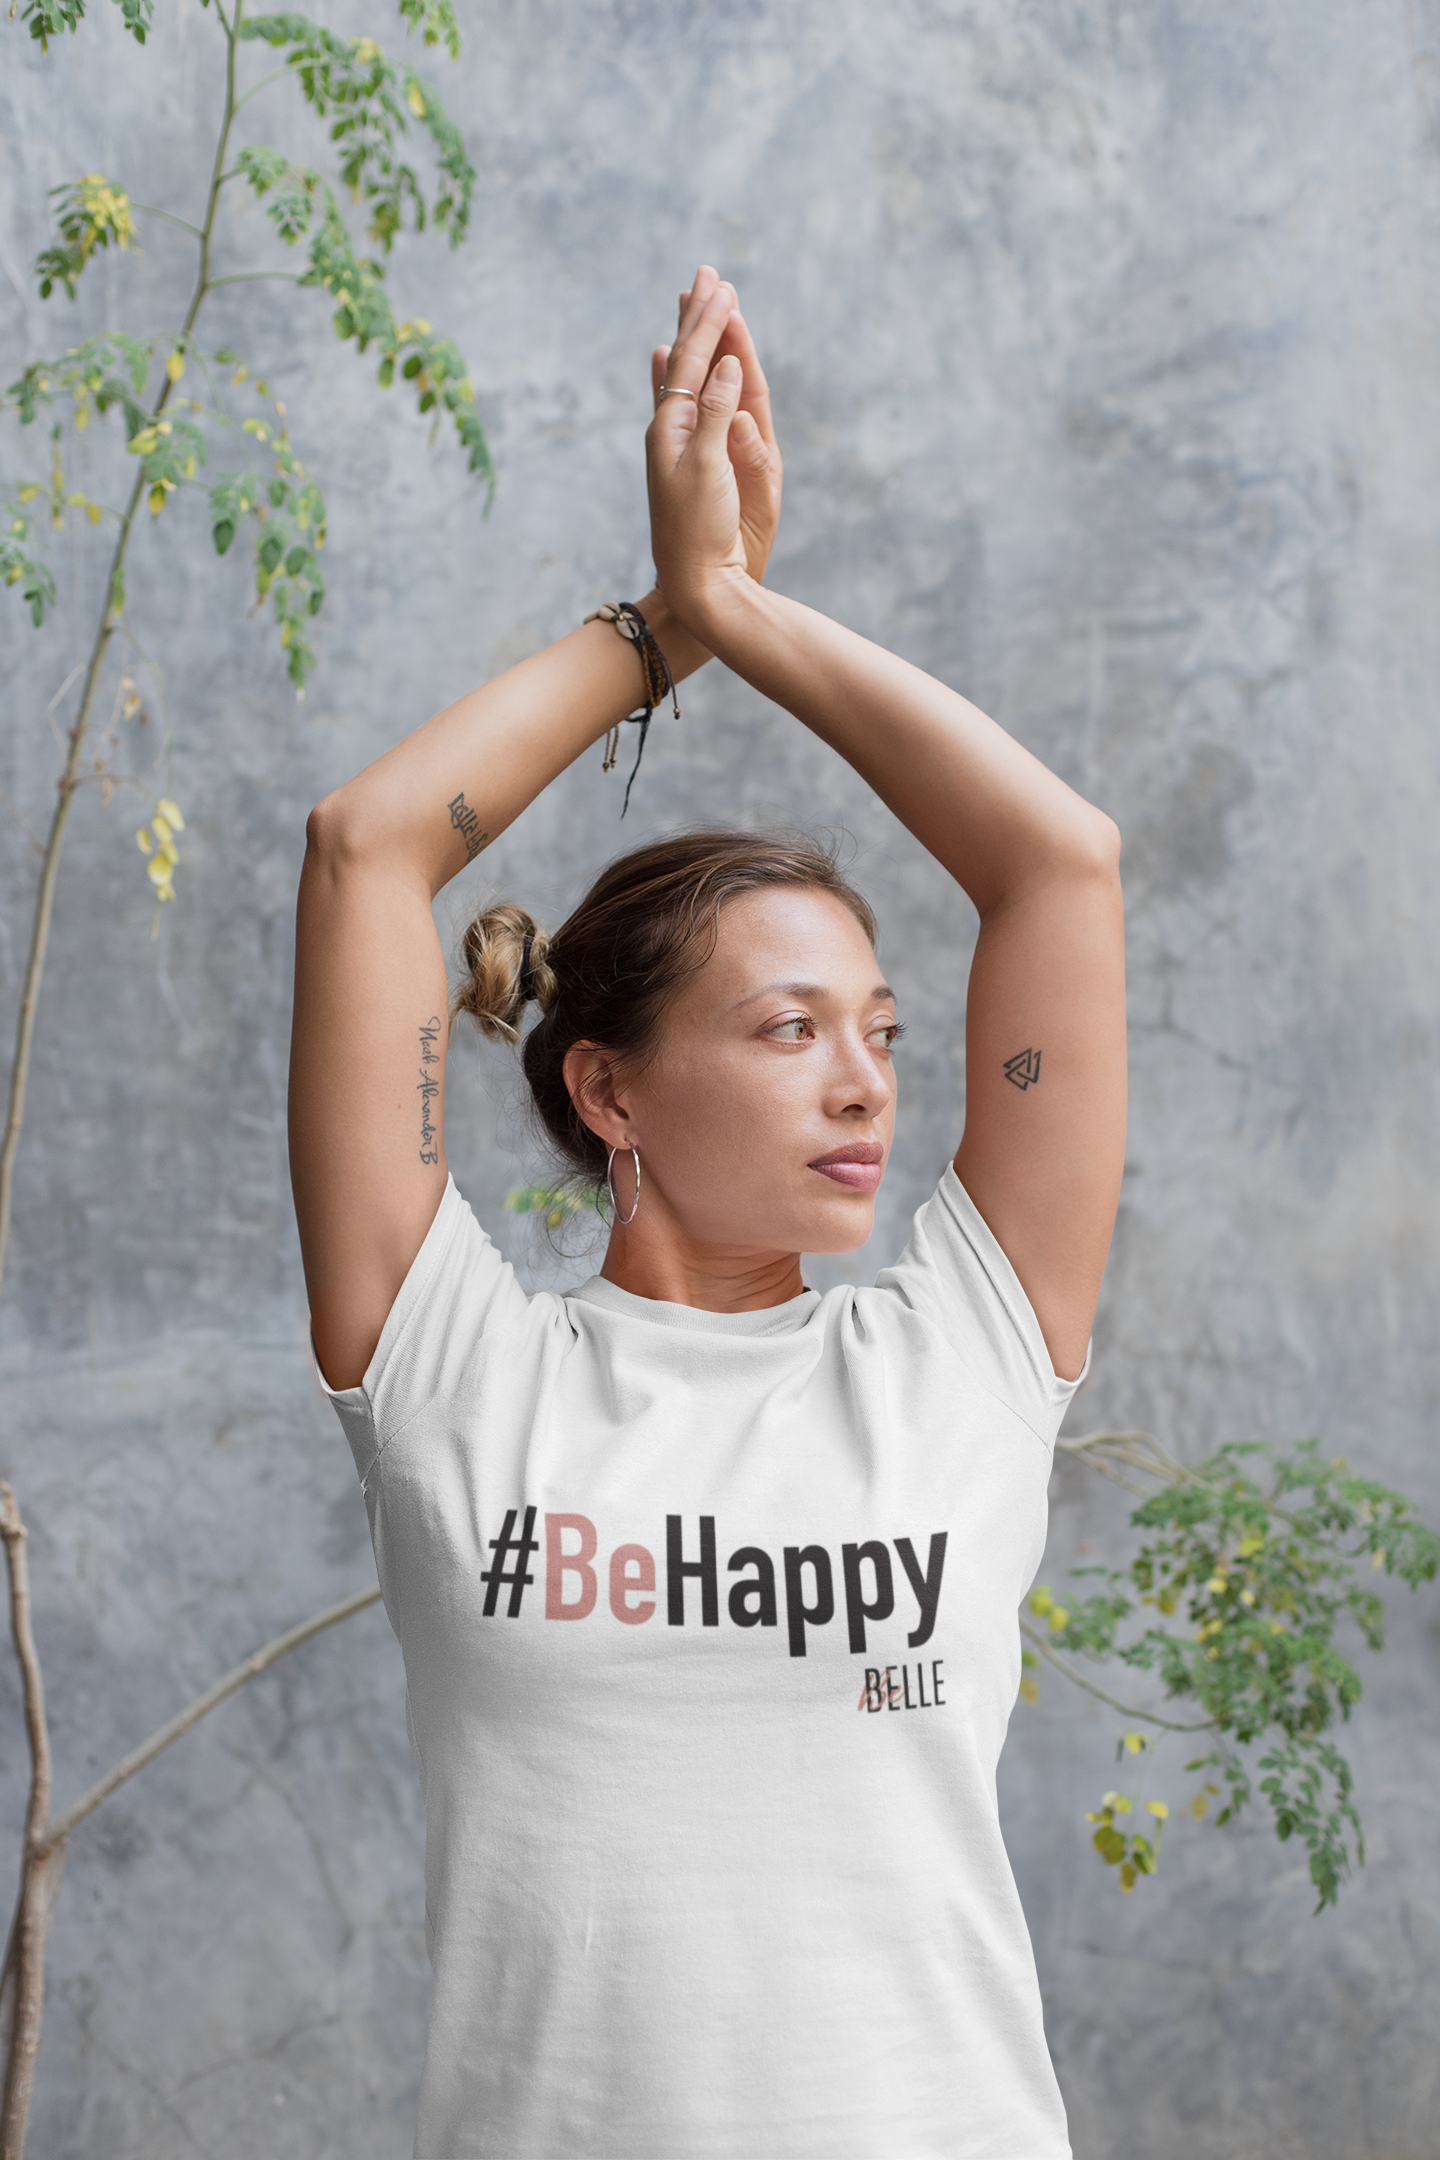 Yoga Pose Women's Tshirt - XL / Heather Black  Yoga women, T shirts for  women, Womens shirts